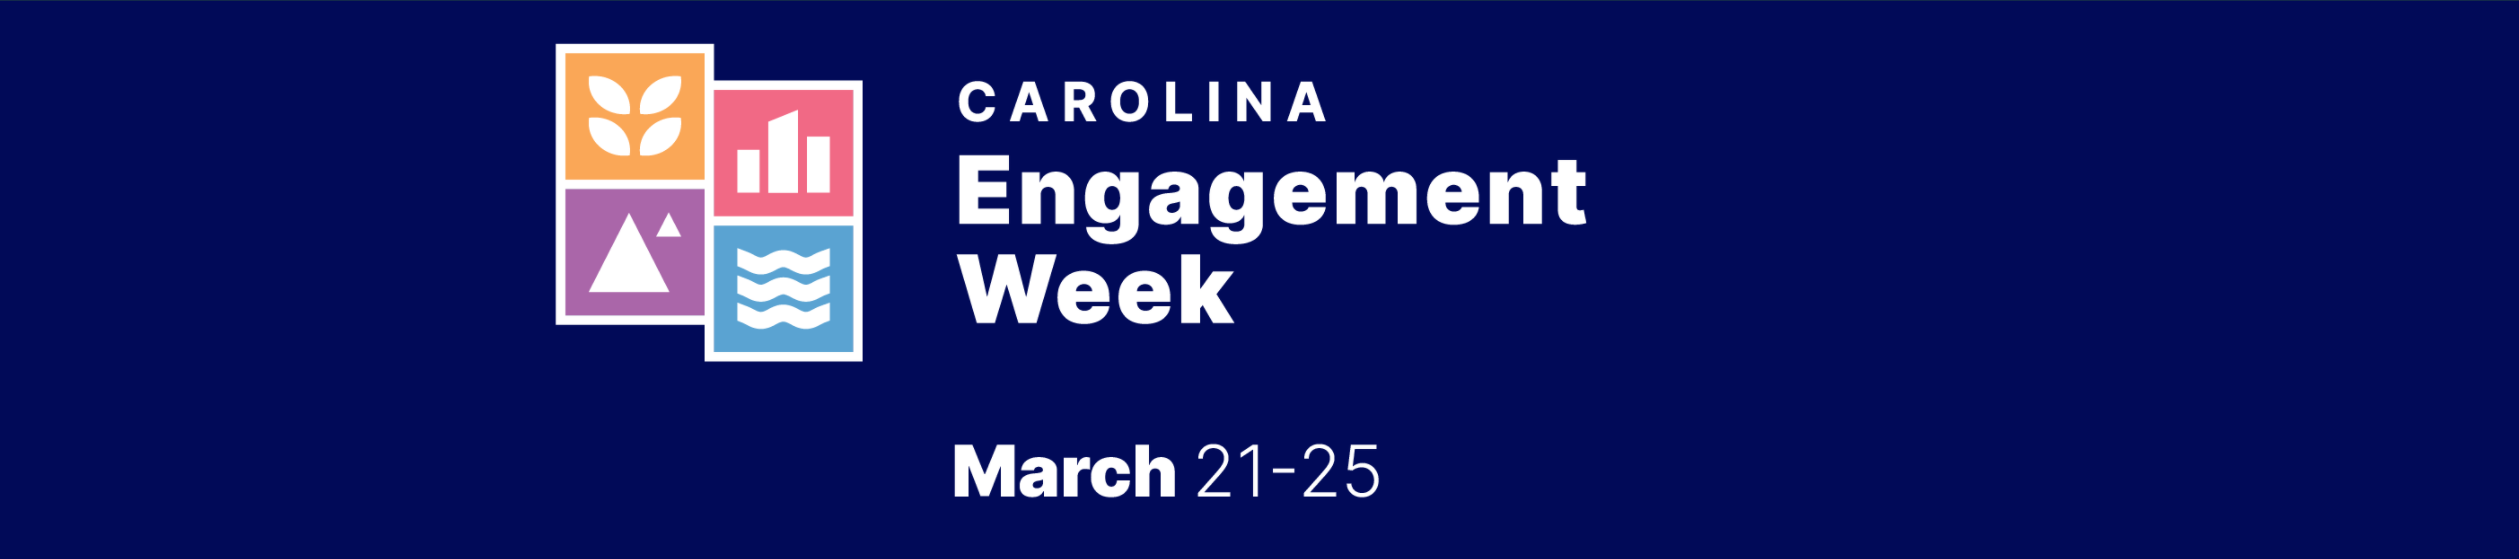 Carolina_Engagement_Week_header